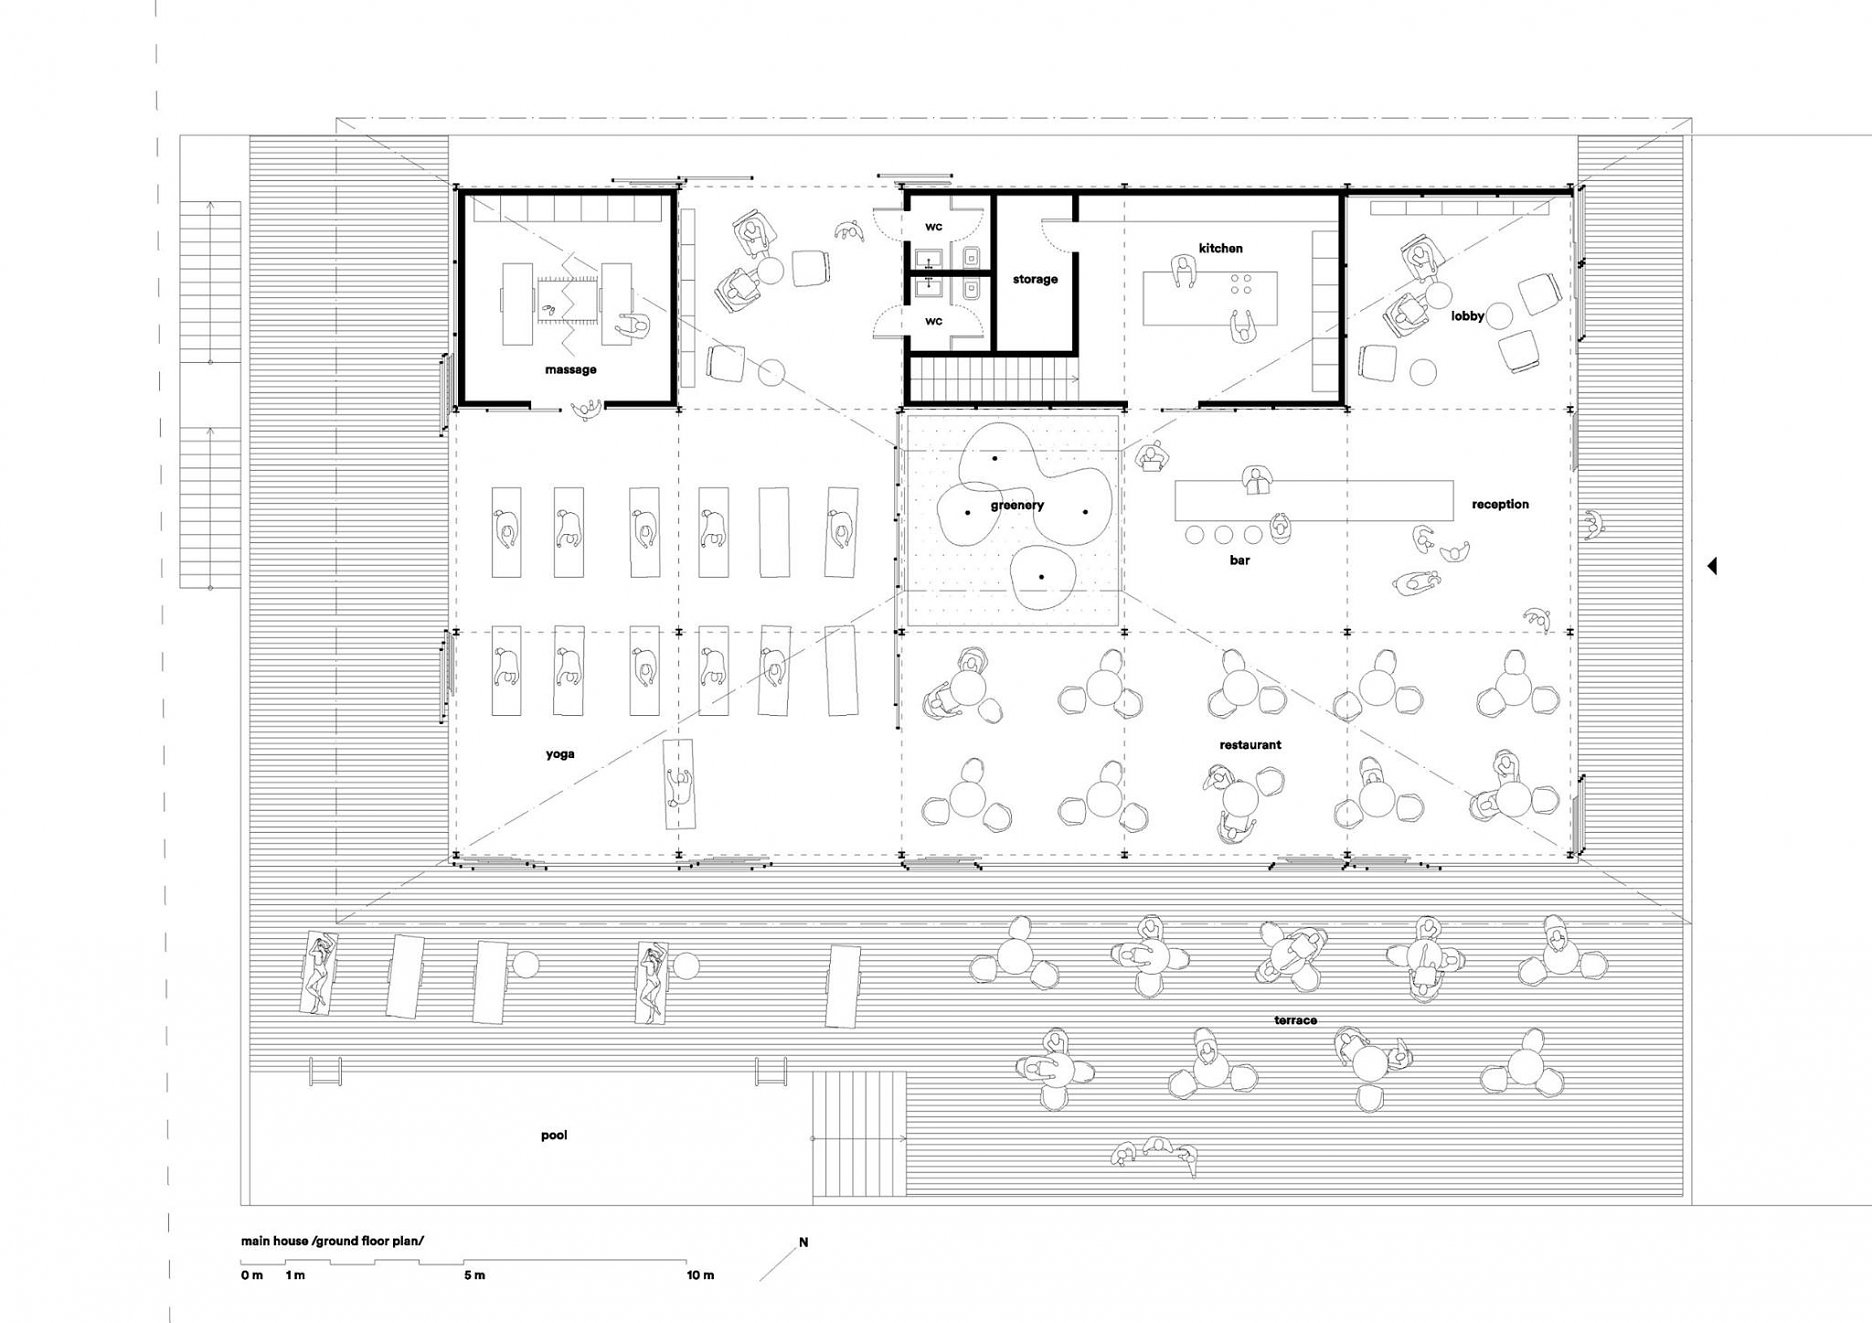 Main house - ground floor plan